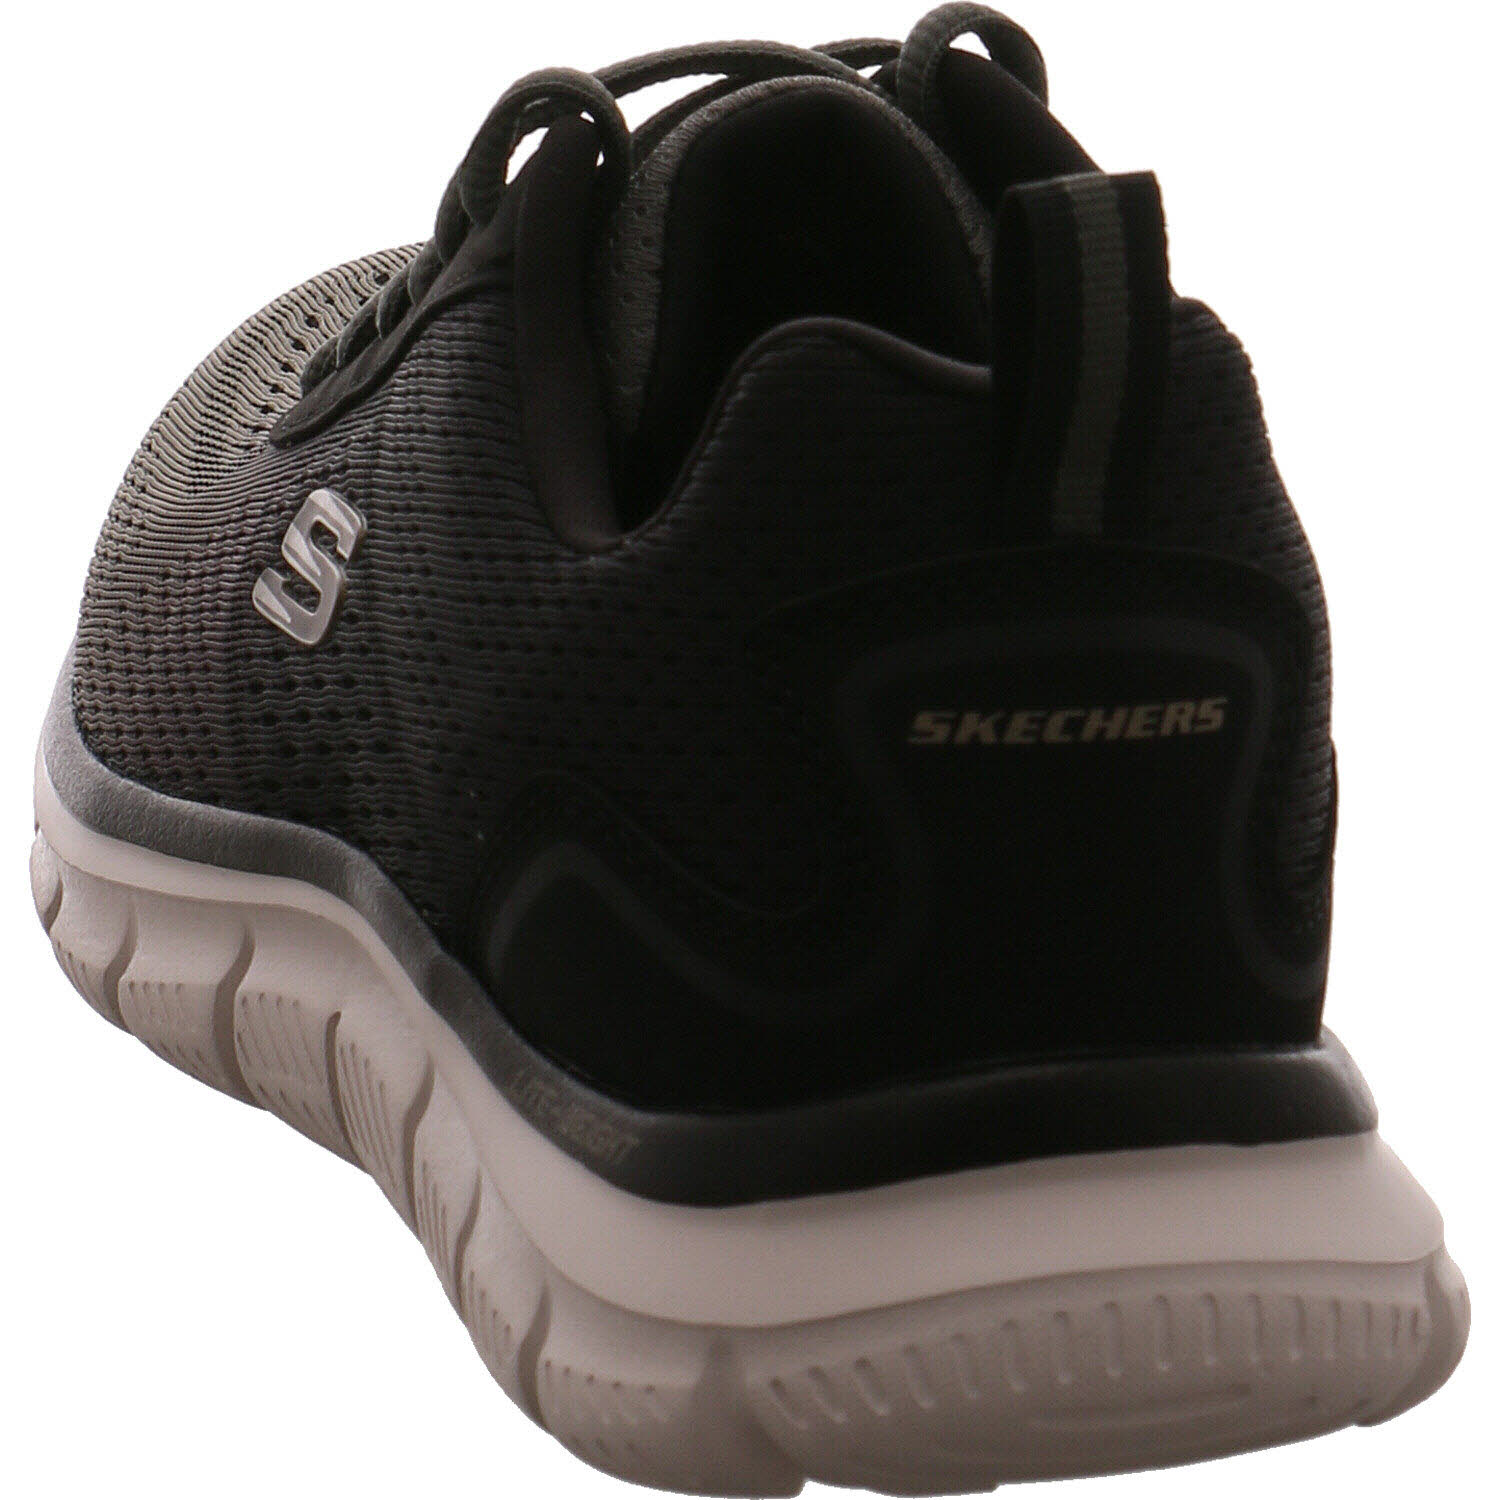 Skechers Sneaker low track ripkent